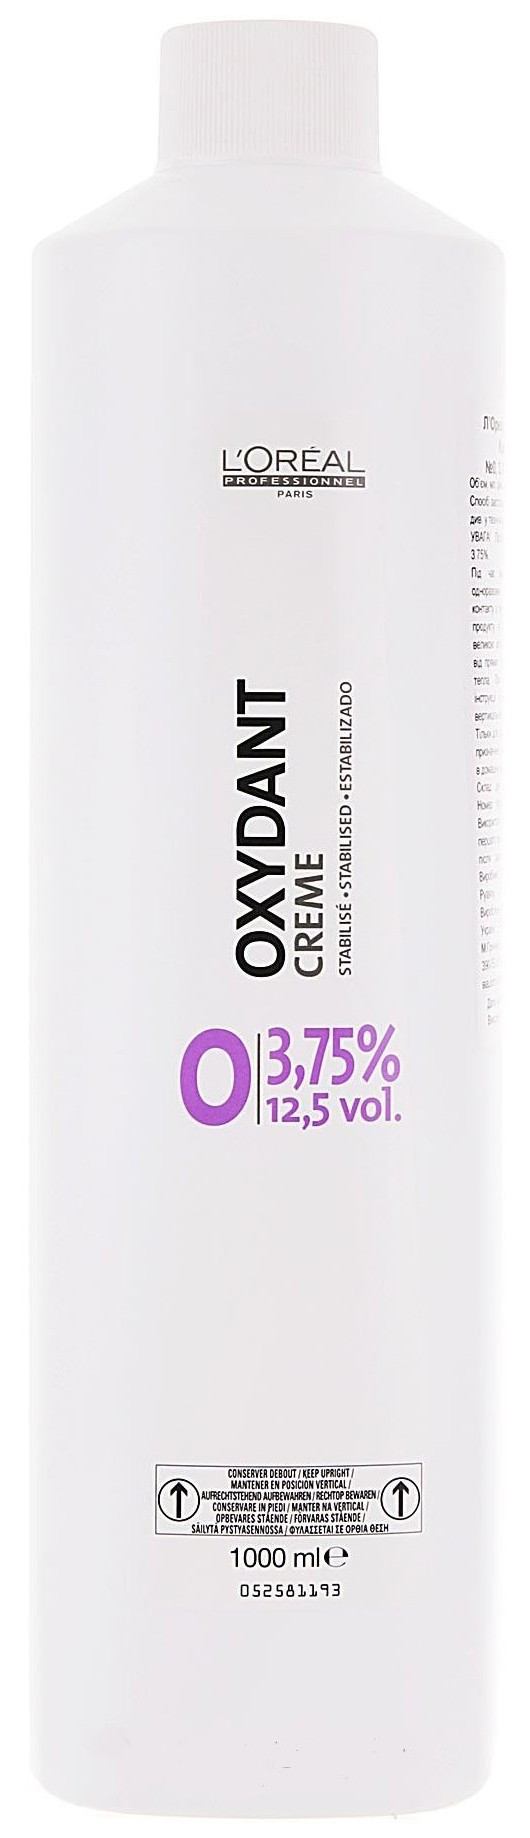 Проявитель L'Oreal Professionnel Oxydant Creame 3,75% 1000 мл проявитель l oreal professionnel dia activator 1 8% 6 vol 1000 мл